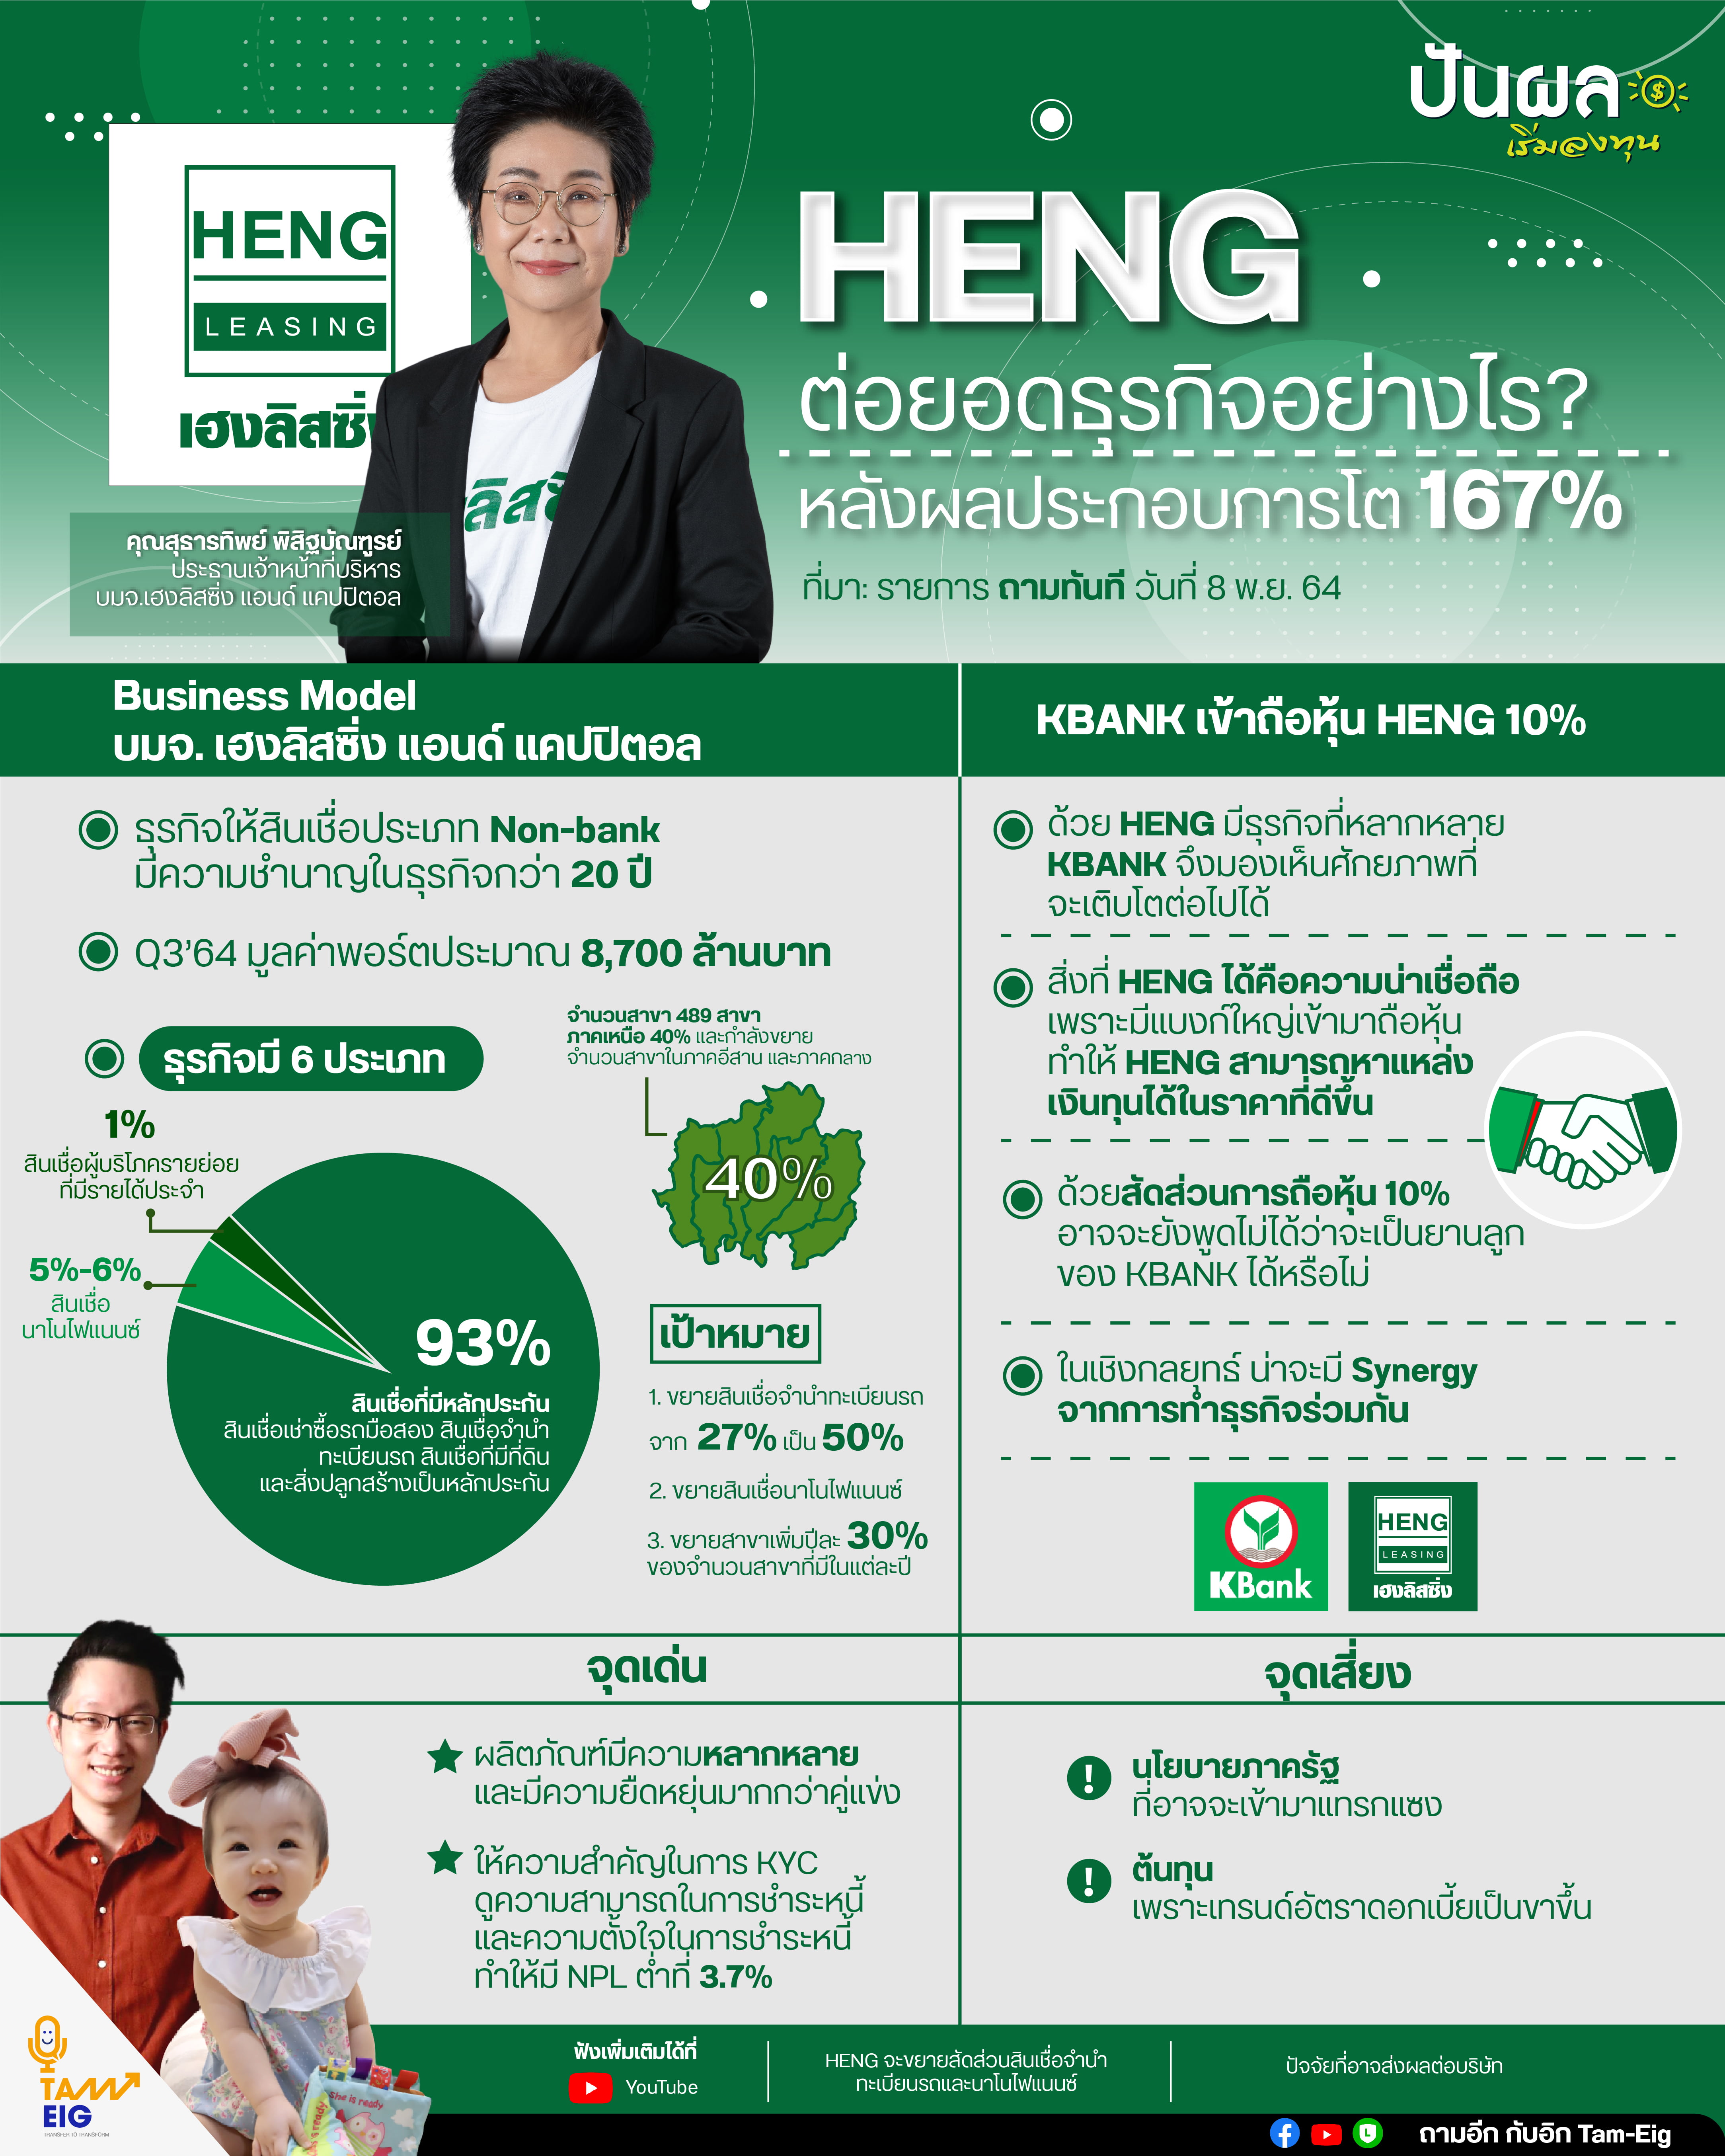 HENG ต่อยอดธุรกิจอย่างไร? หลังผลประกอบการโต 167%